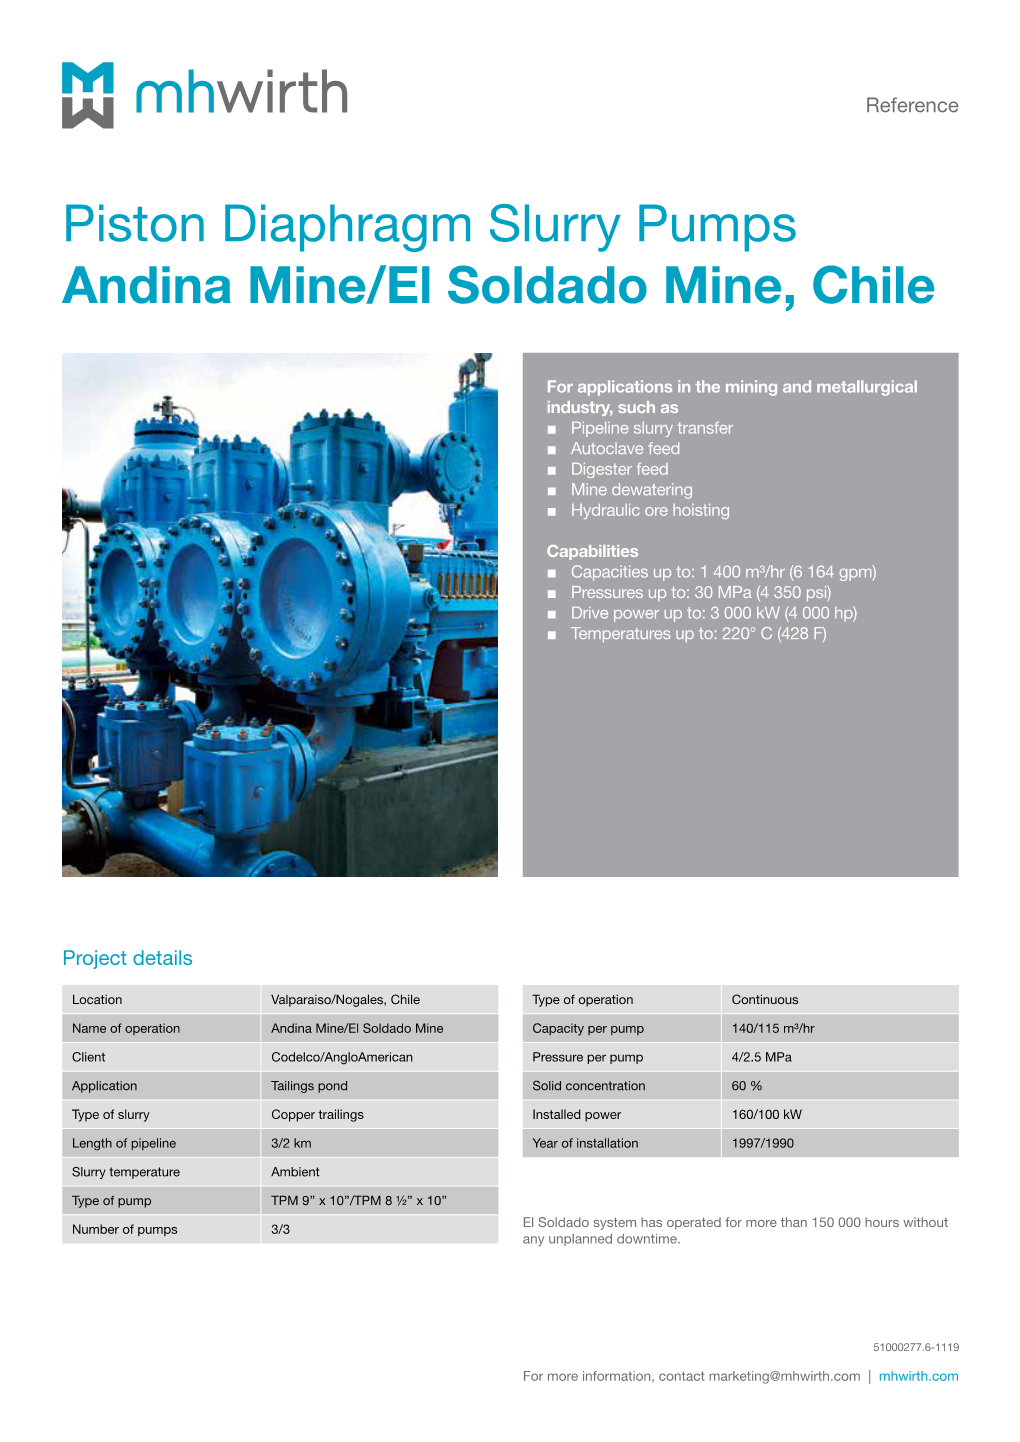 Piston Diaphragm Slurry Pumps Andina Mine/El Soldado Mine, Chile